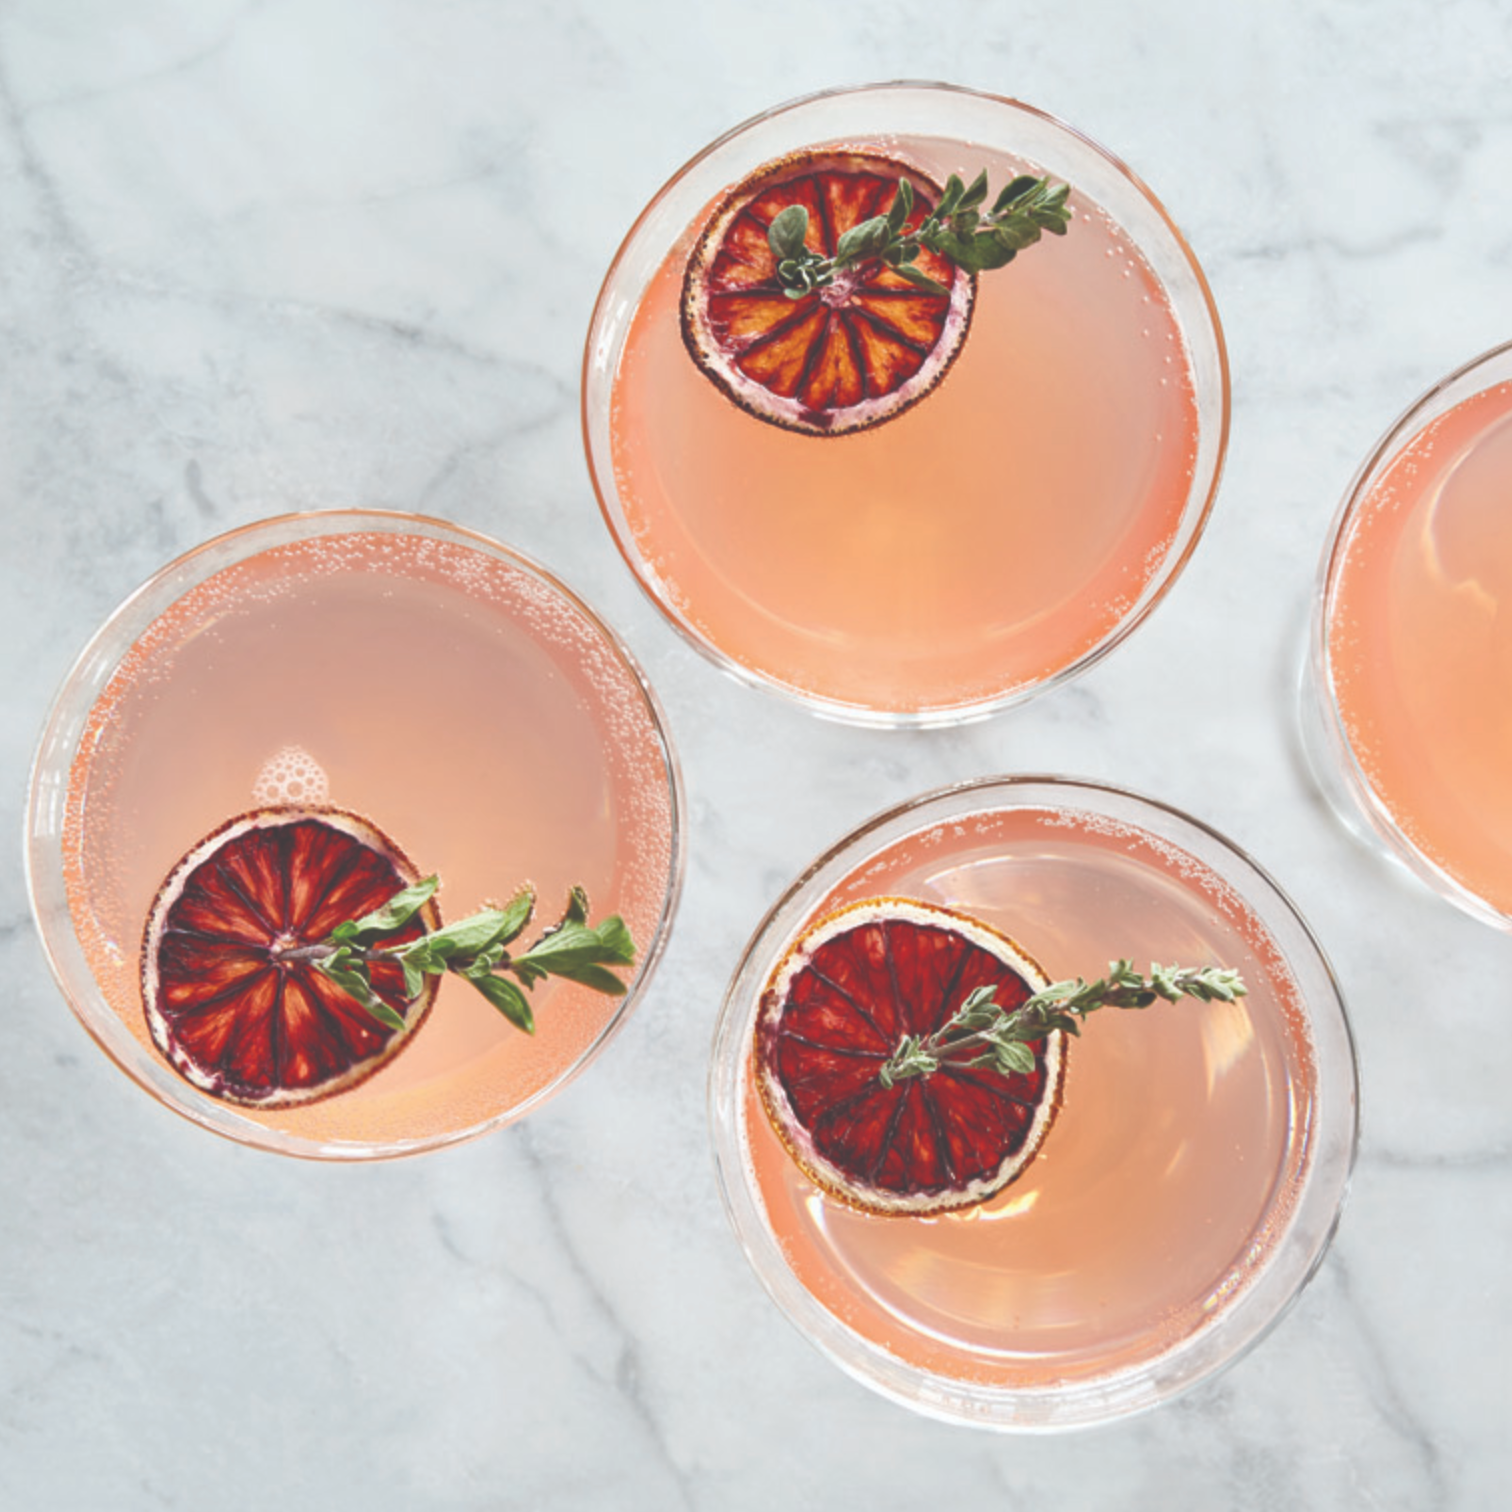 Cocktail featuring Crispy Blood Orange Slices